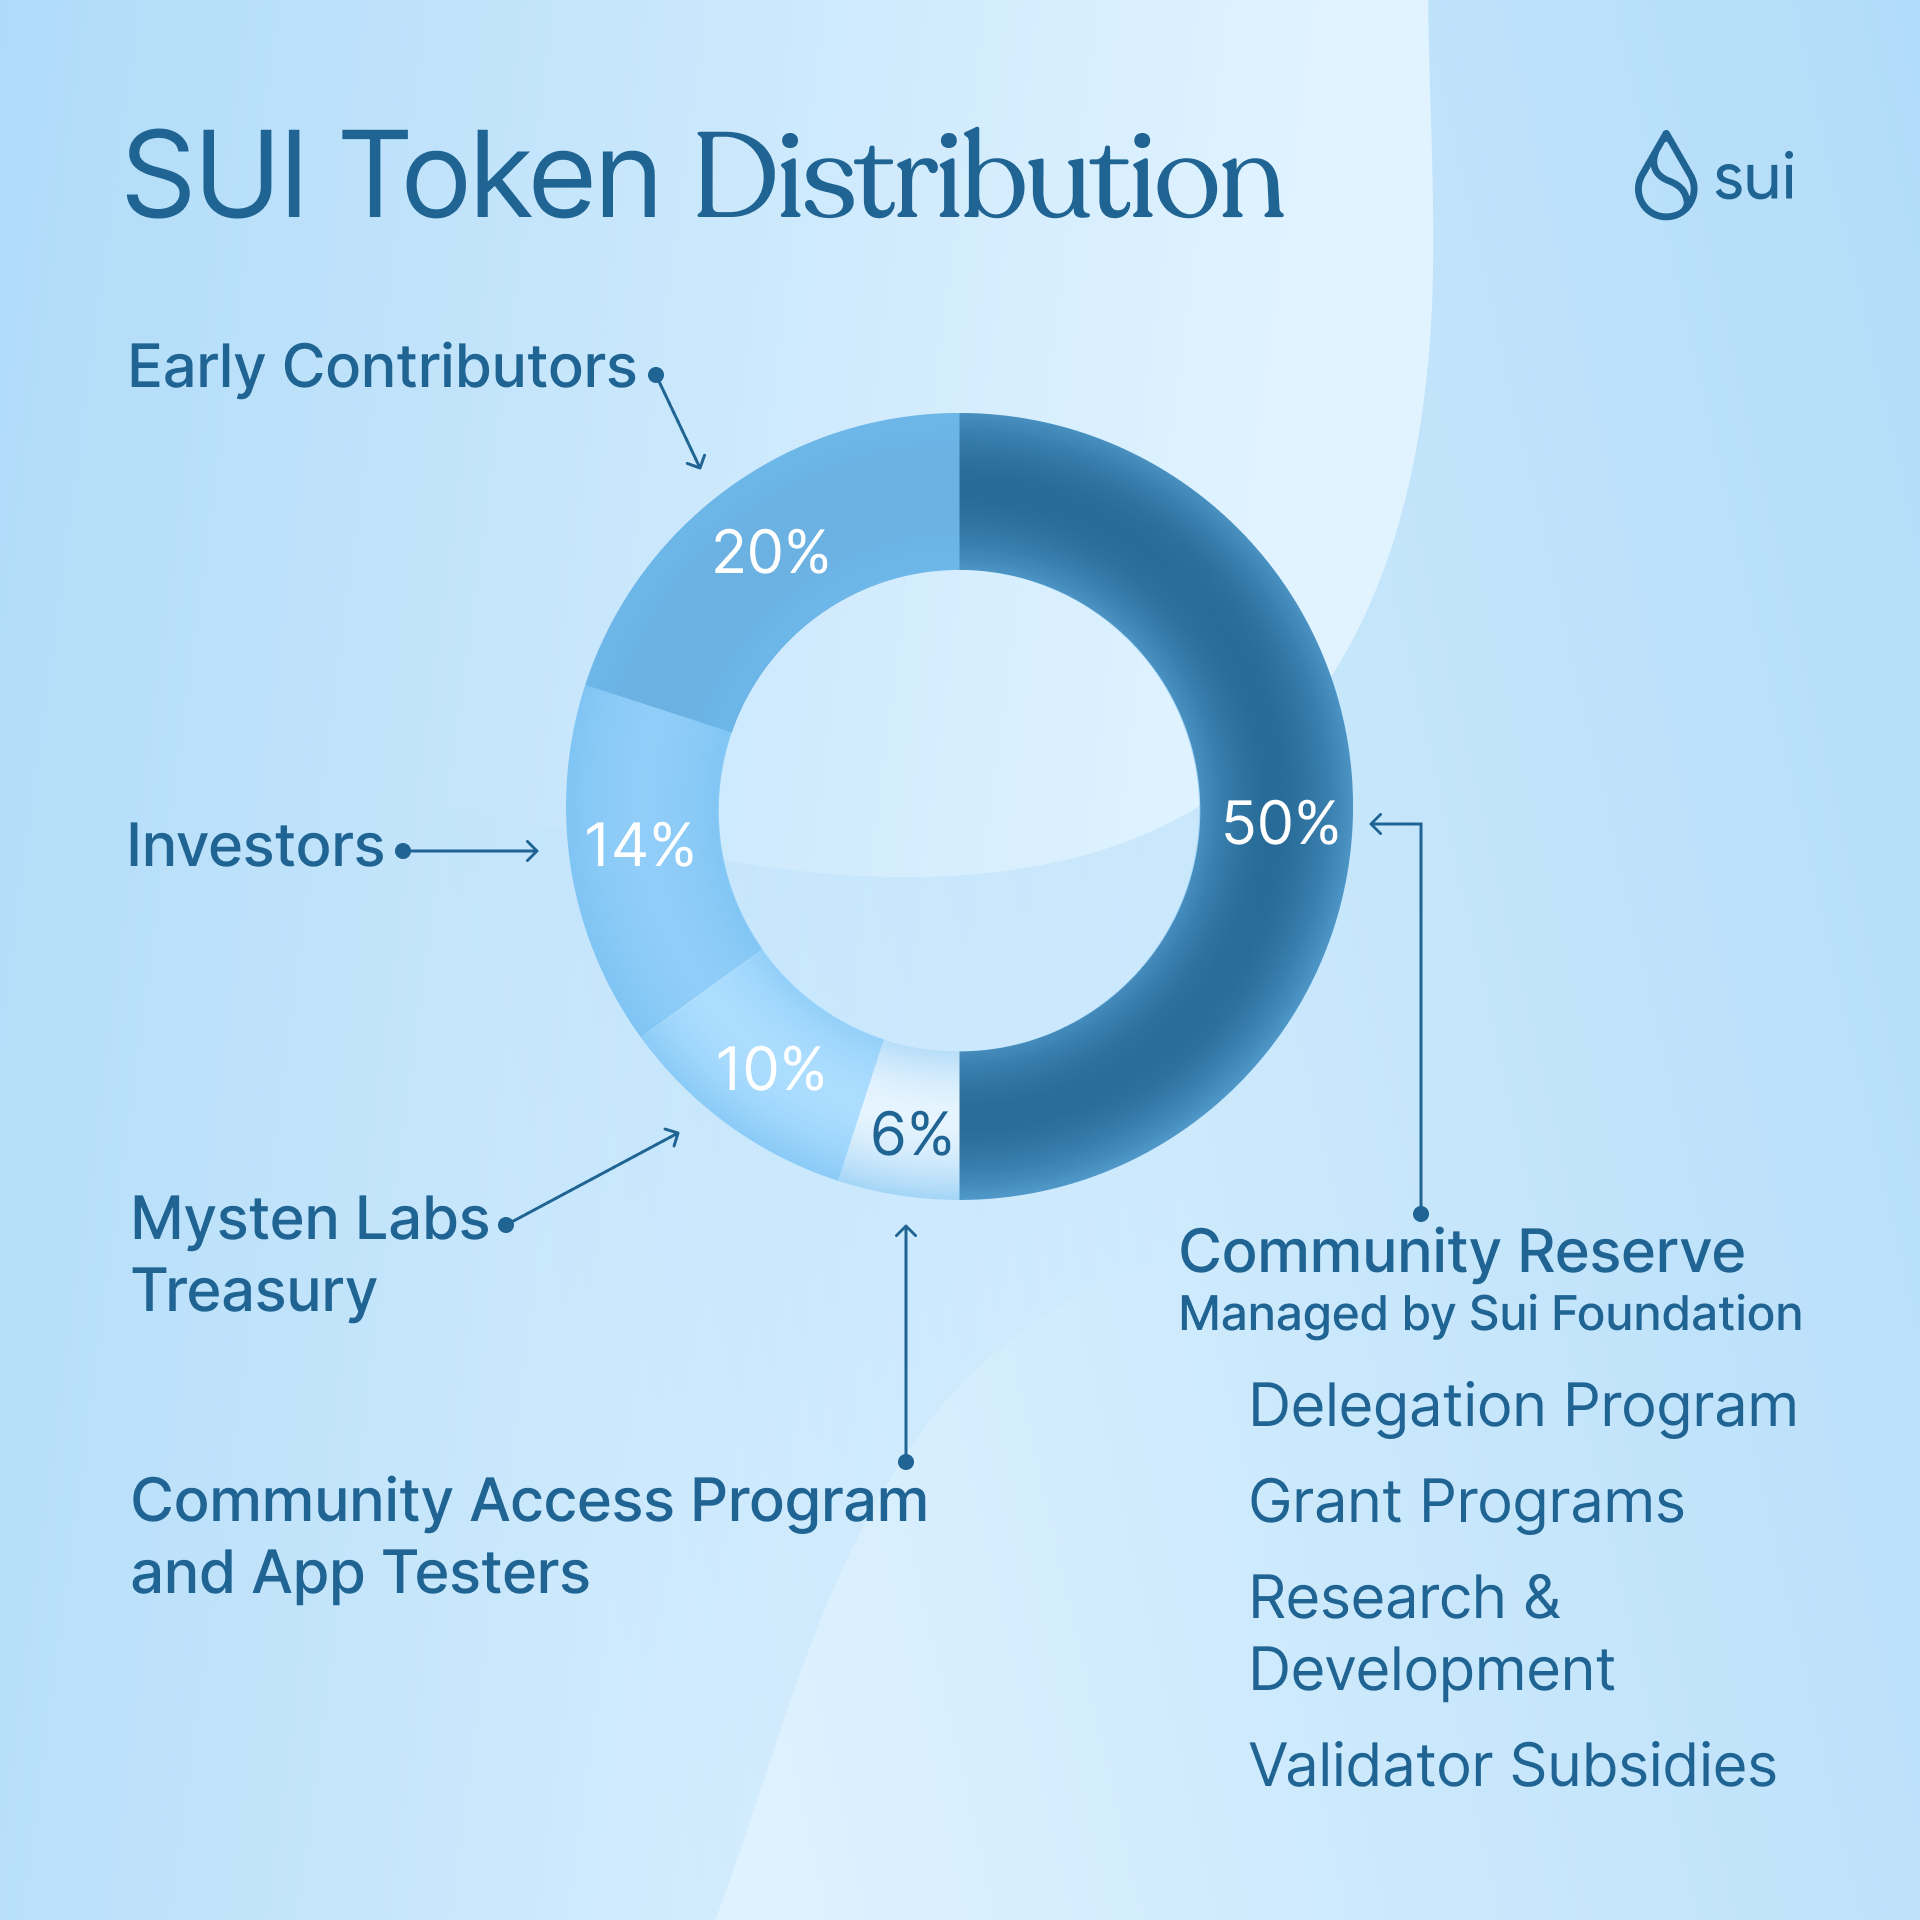 Sui基金会公布SUI Token的分配细节，社区储备占比50%